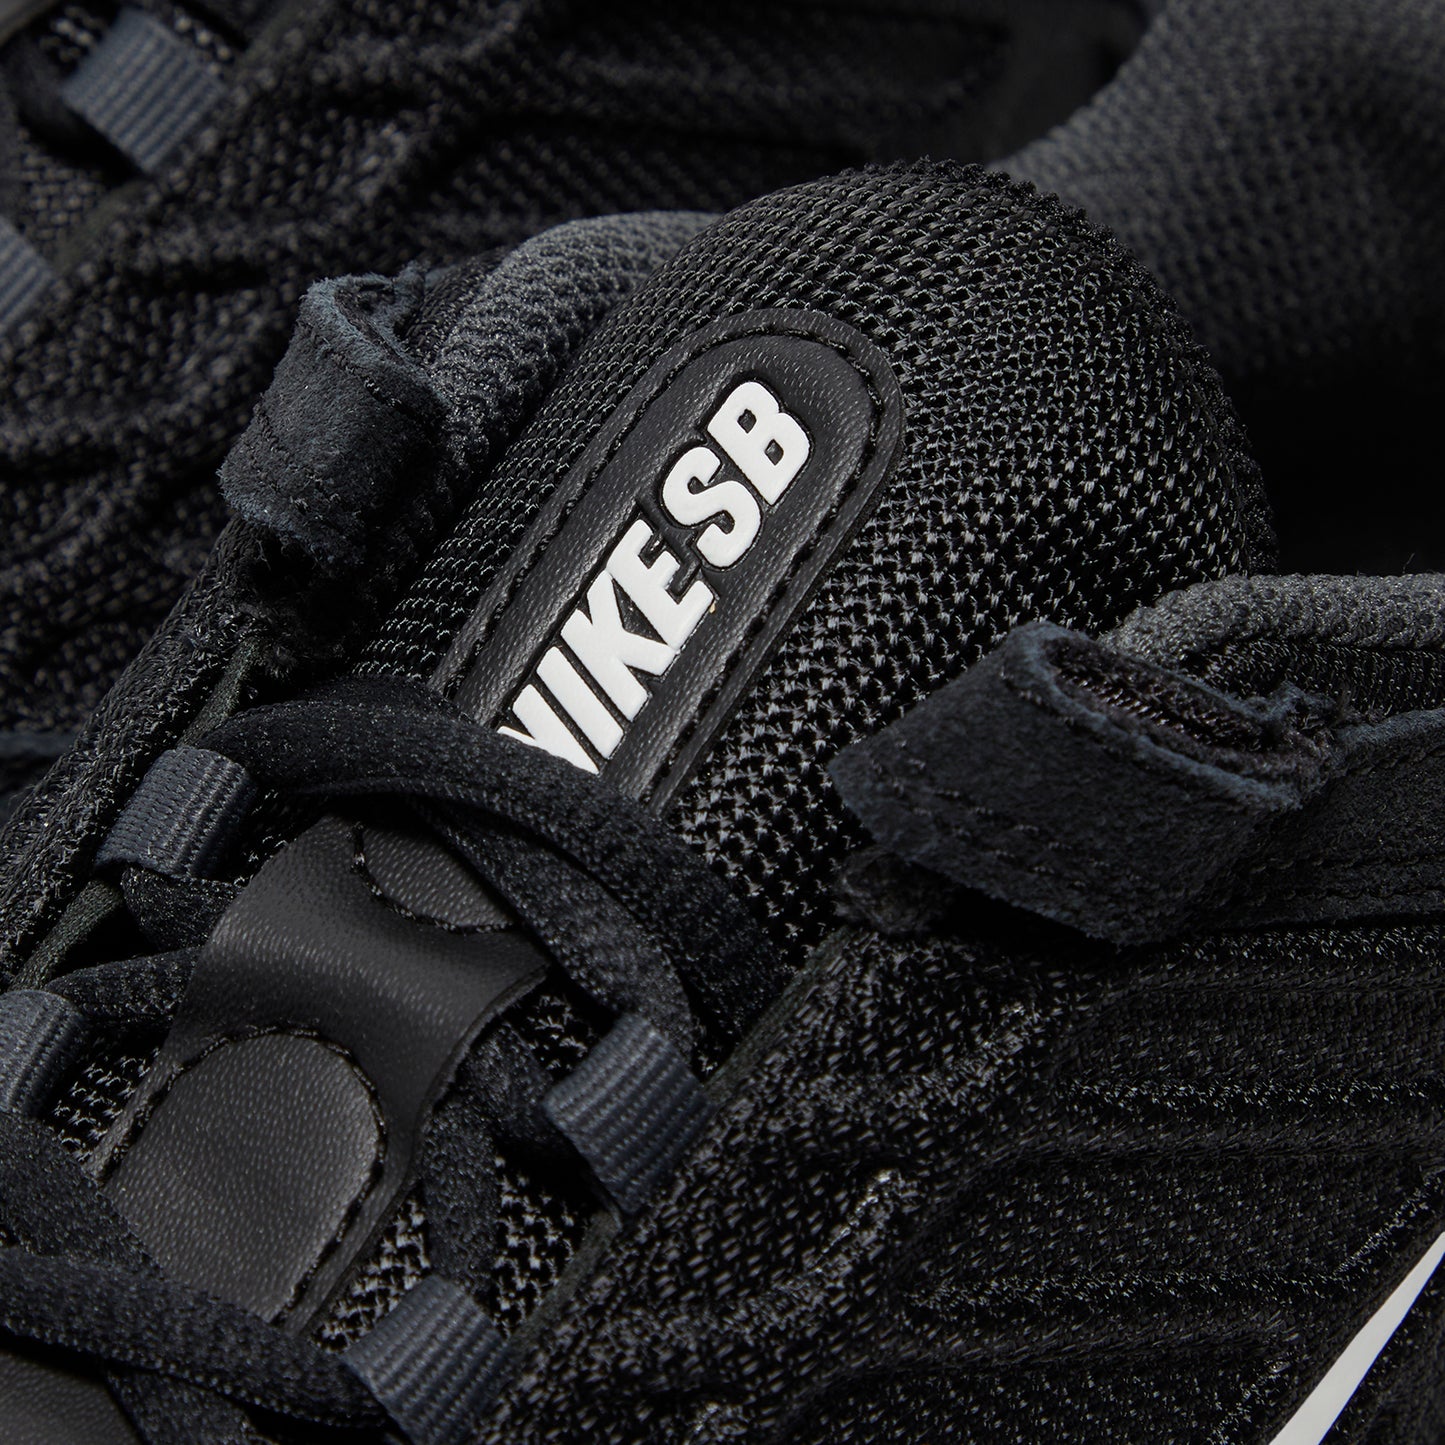 Nike SB Vertebrae (Black/Summit White/Anthracite)